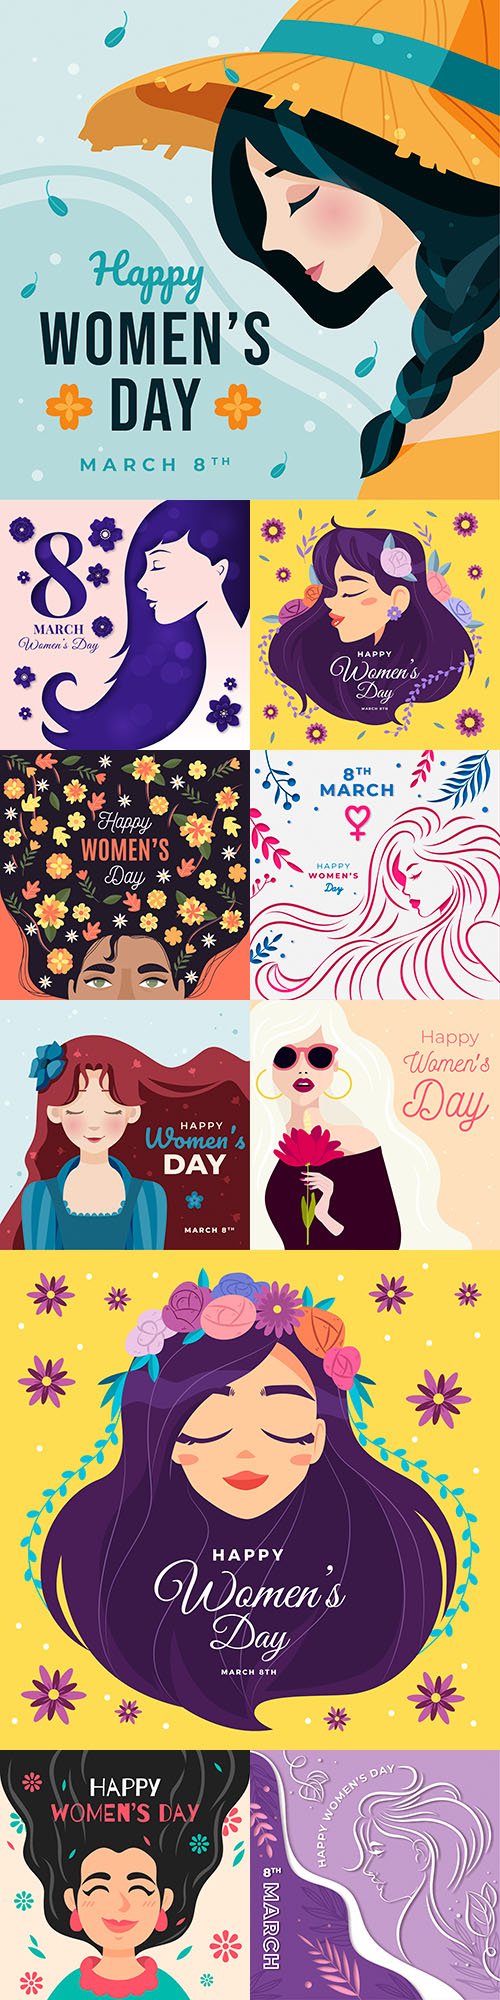 March 8 Women's Day illustration design concept 4